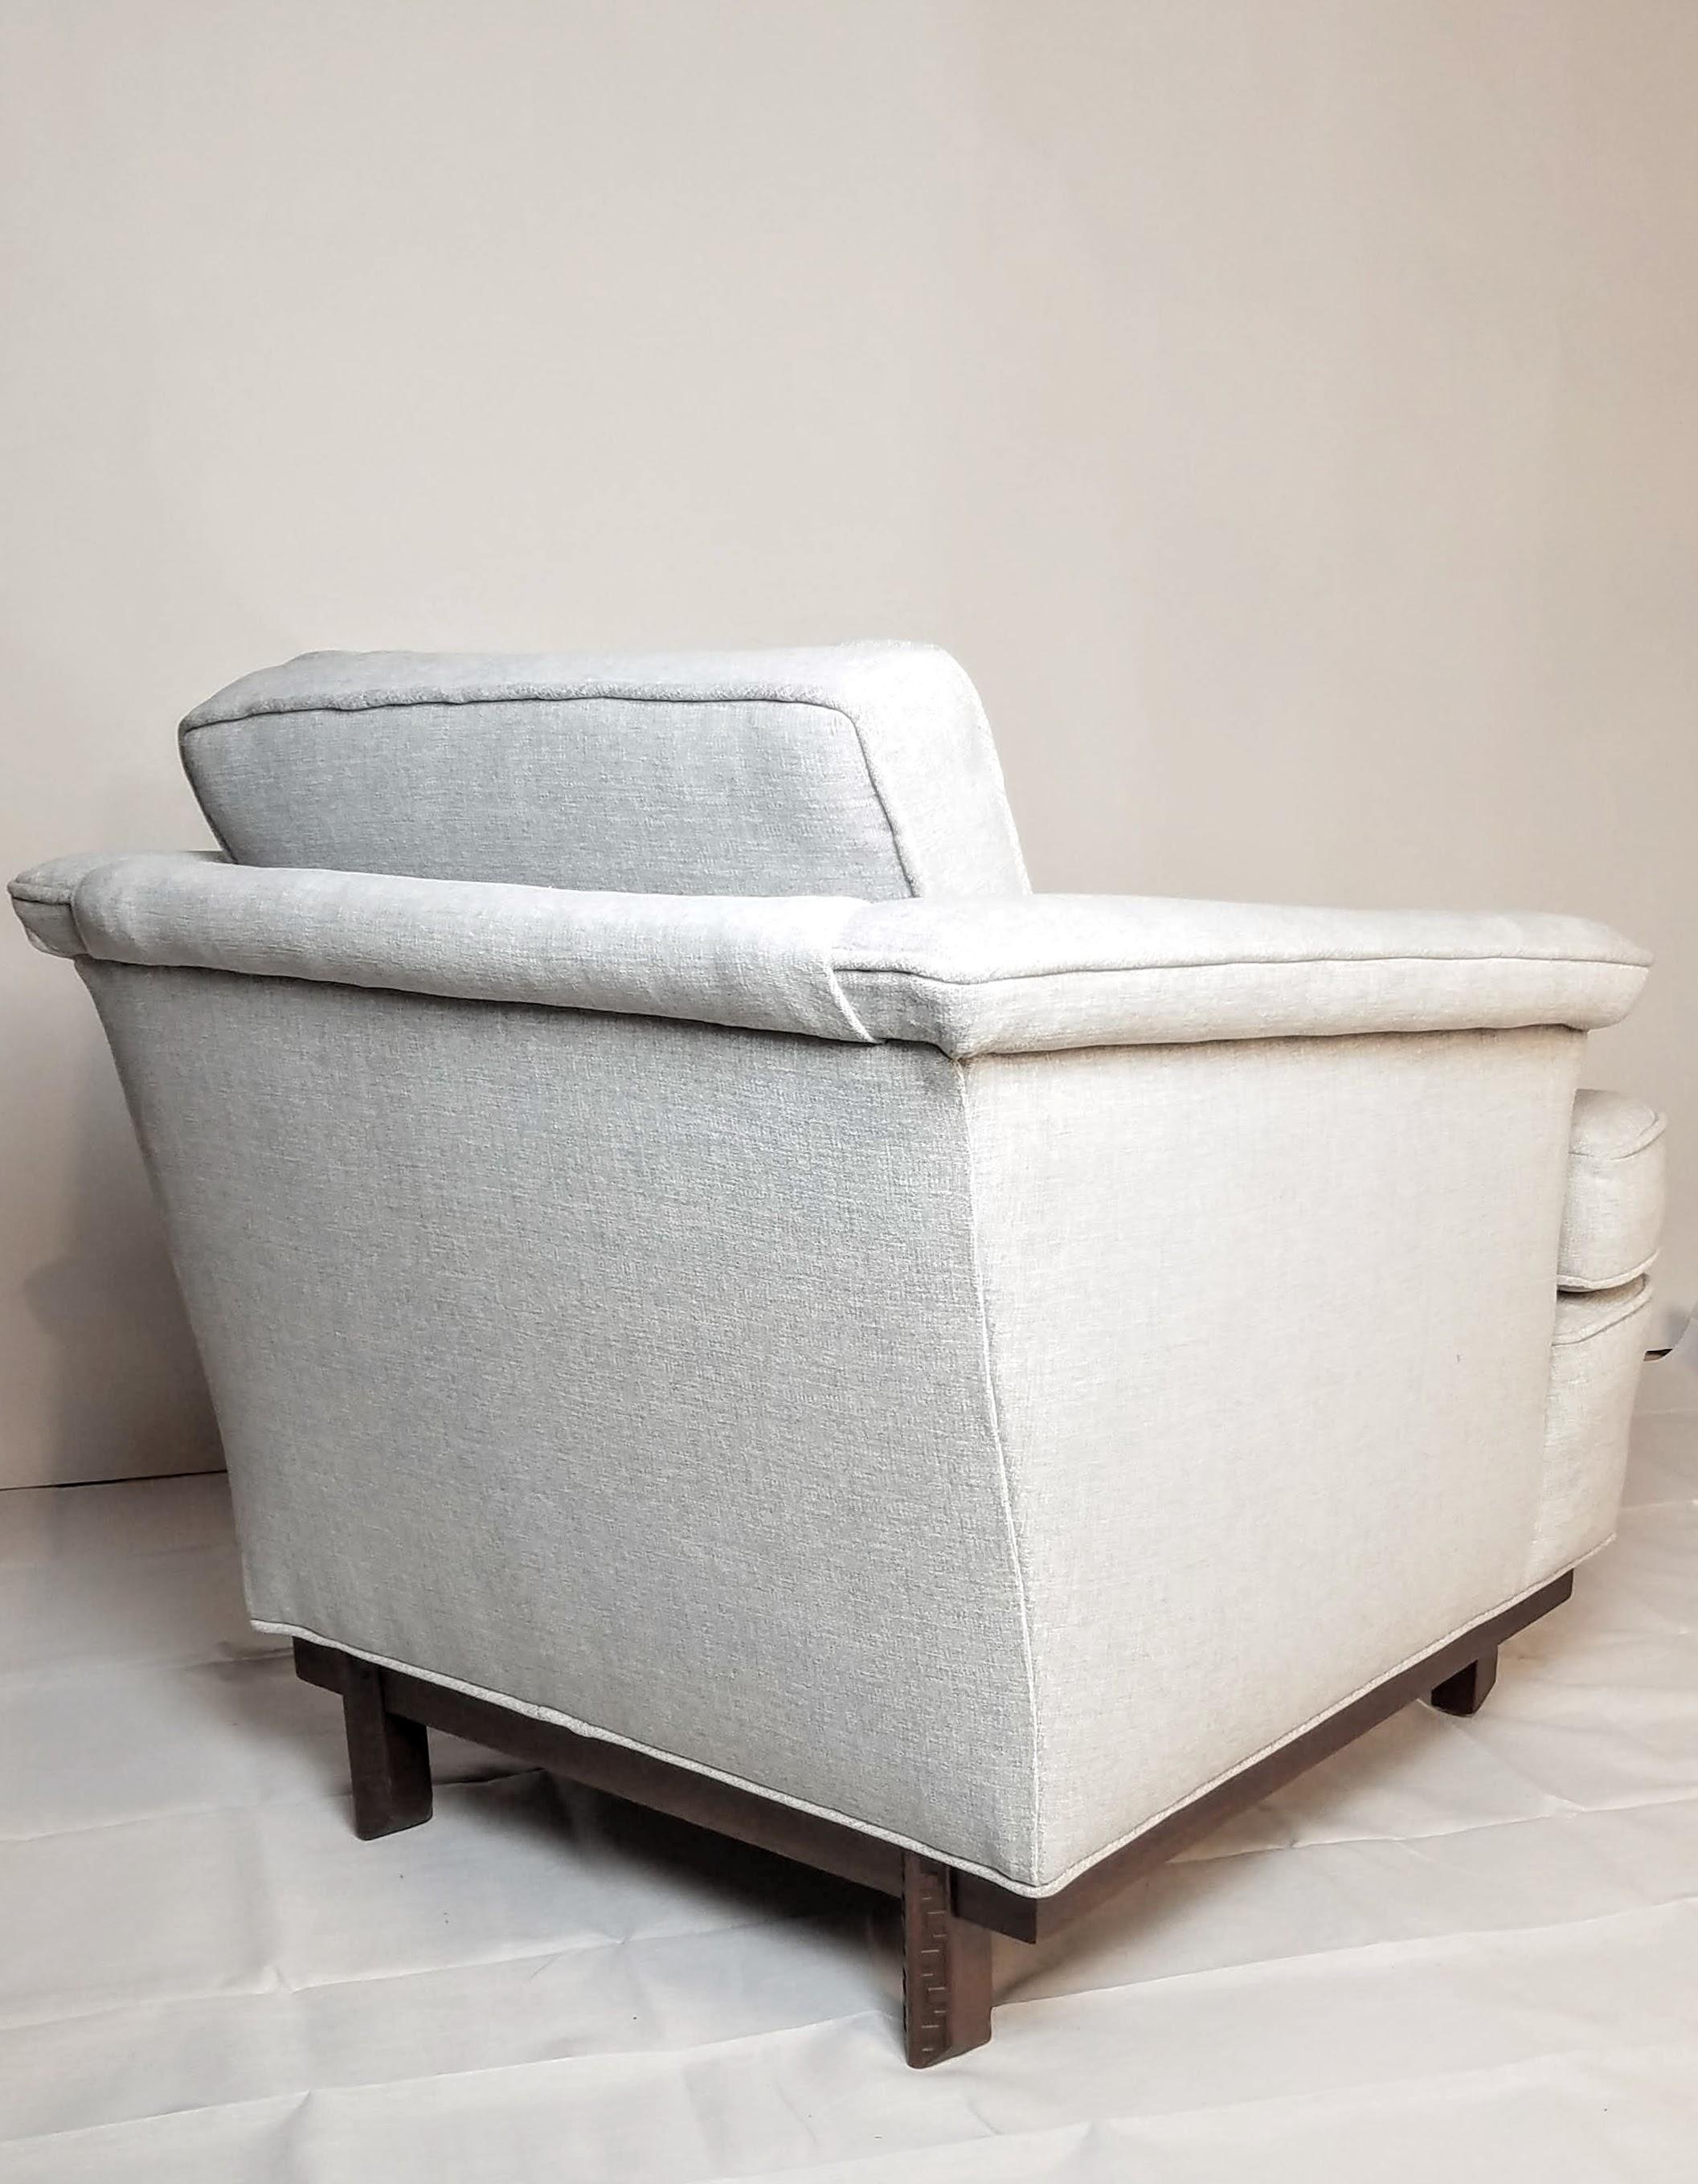 Frank Lloyd Wright Mahogany Lounge Chair Heritage Henredon Taliesin Line 1955/56 For Sale 4